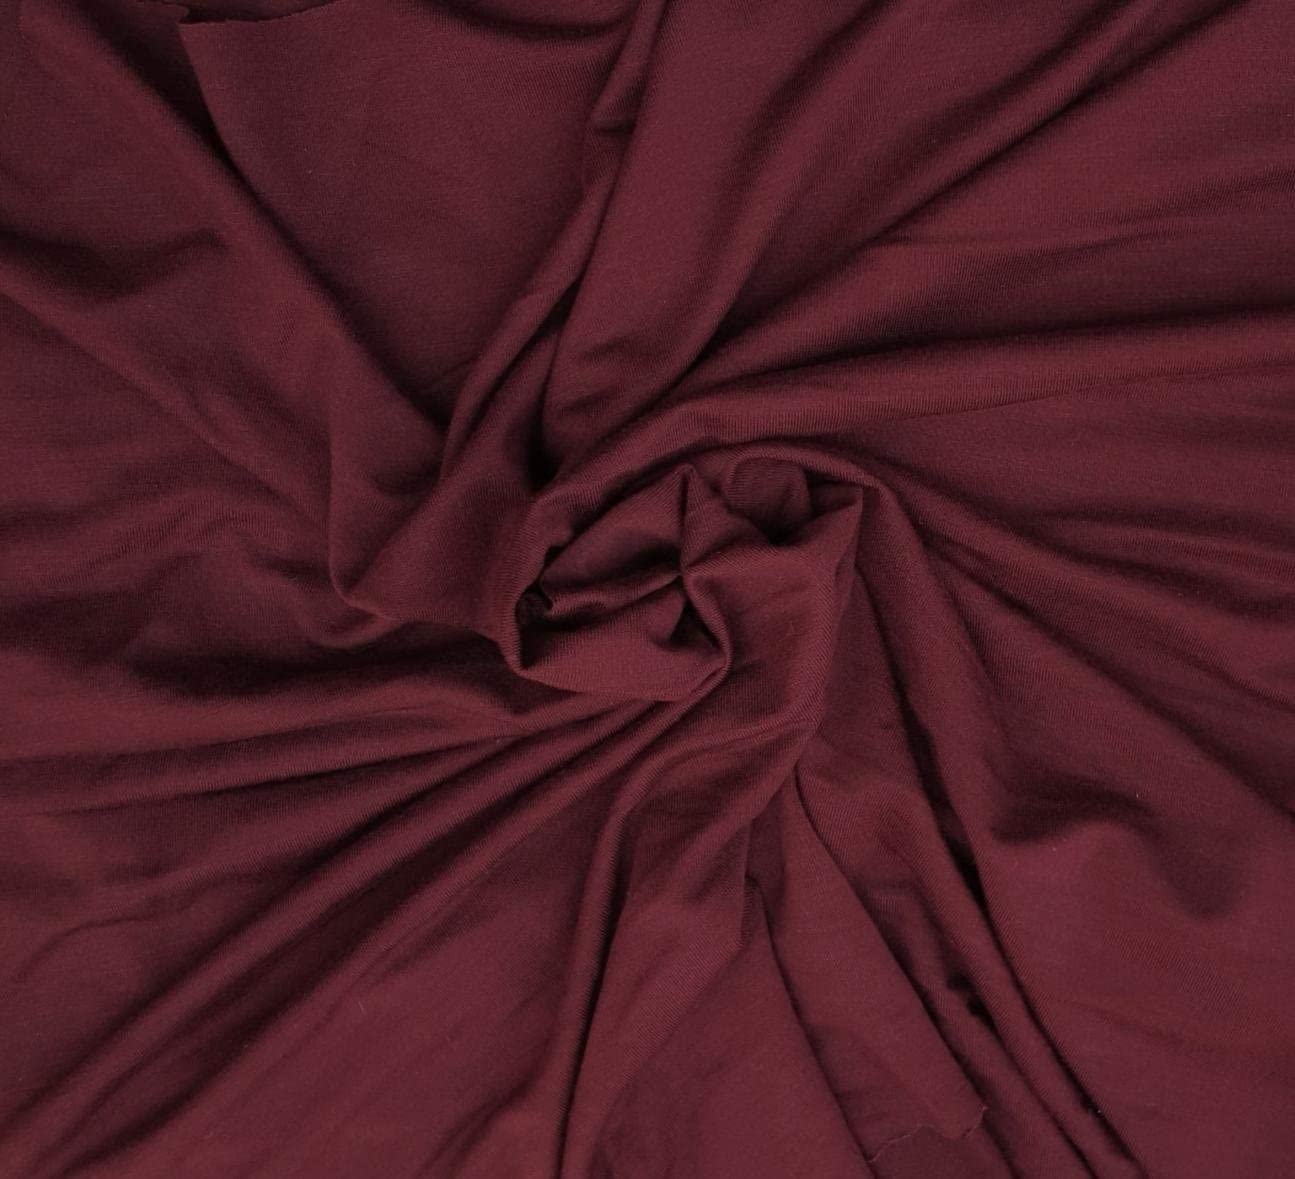 58/60" Wide, 95% Cotton 5% Spandex, Cotton Jersey Spandex Knit Blend, 4 Way Stretch Fabric (Burgundy, 1 Yard)